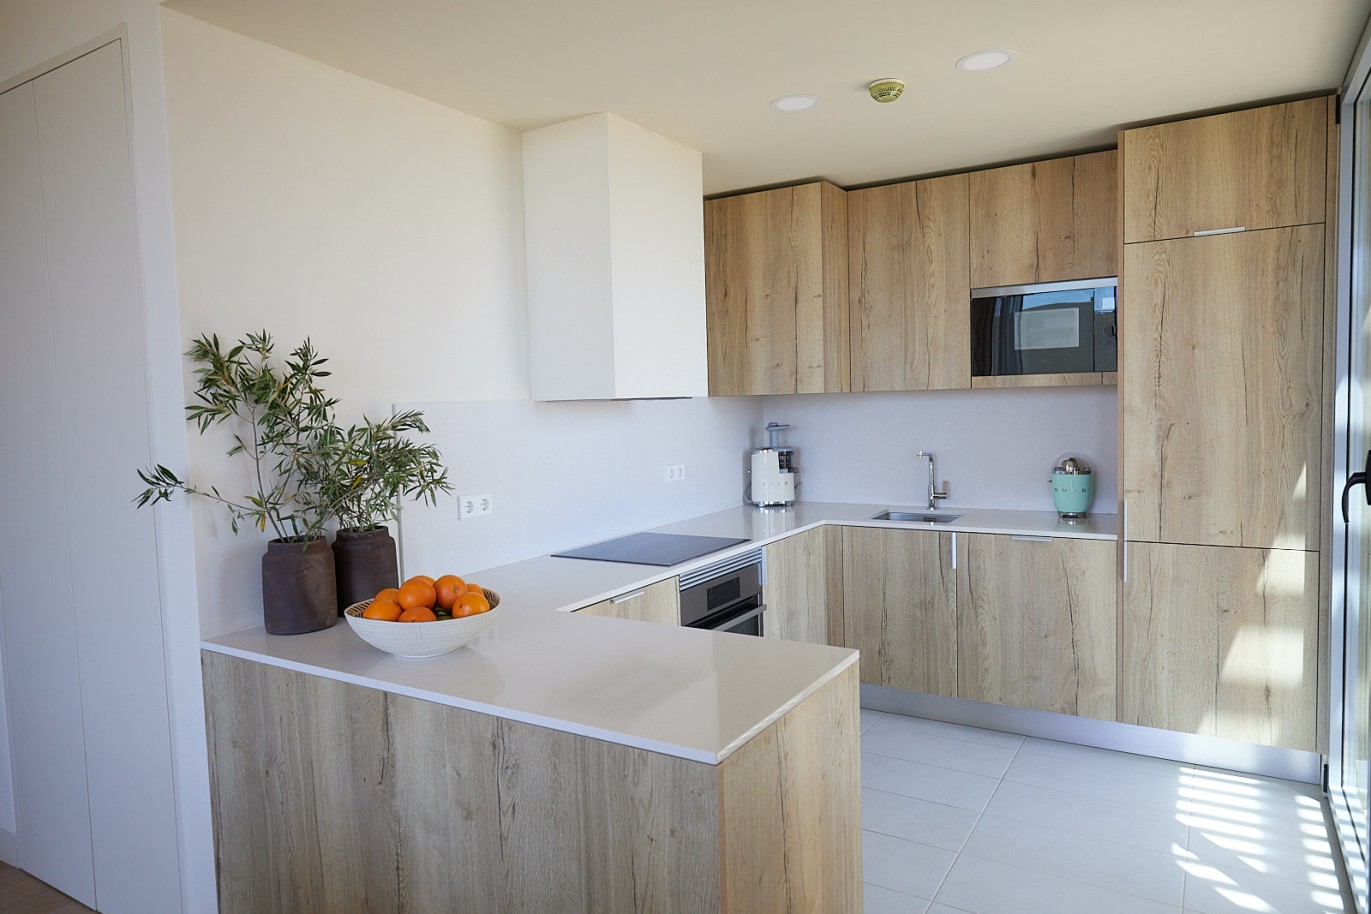 2 bedroom apartment in resort, for sale in Porches, Algarve_230500